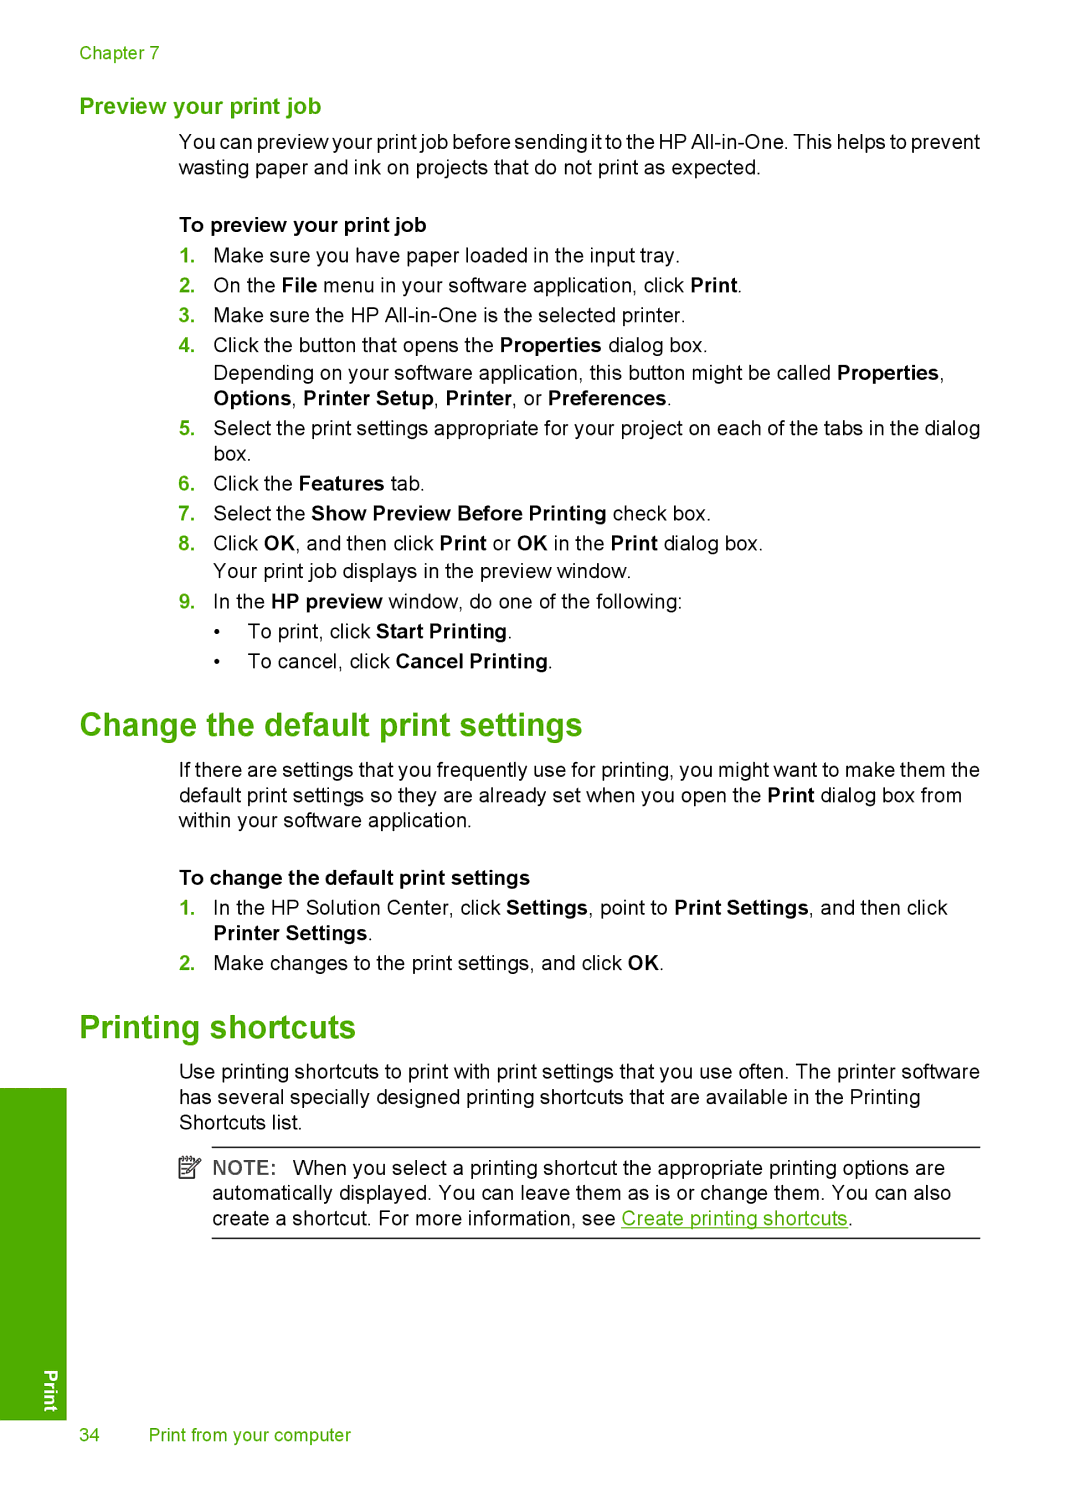 HP F4185, F4140, F4172, F4190, F4180 manual Change the default print settings, Printing shortcuts, Preview your print job 